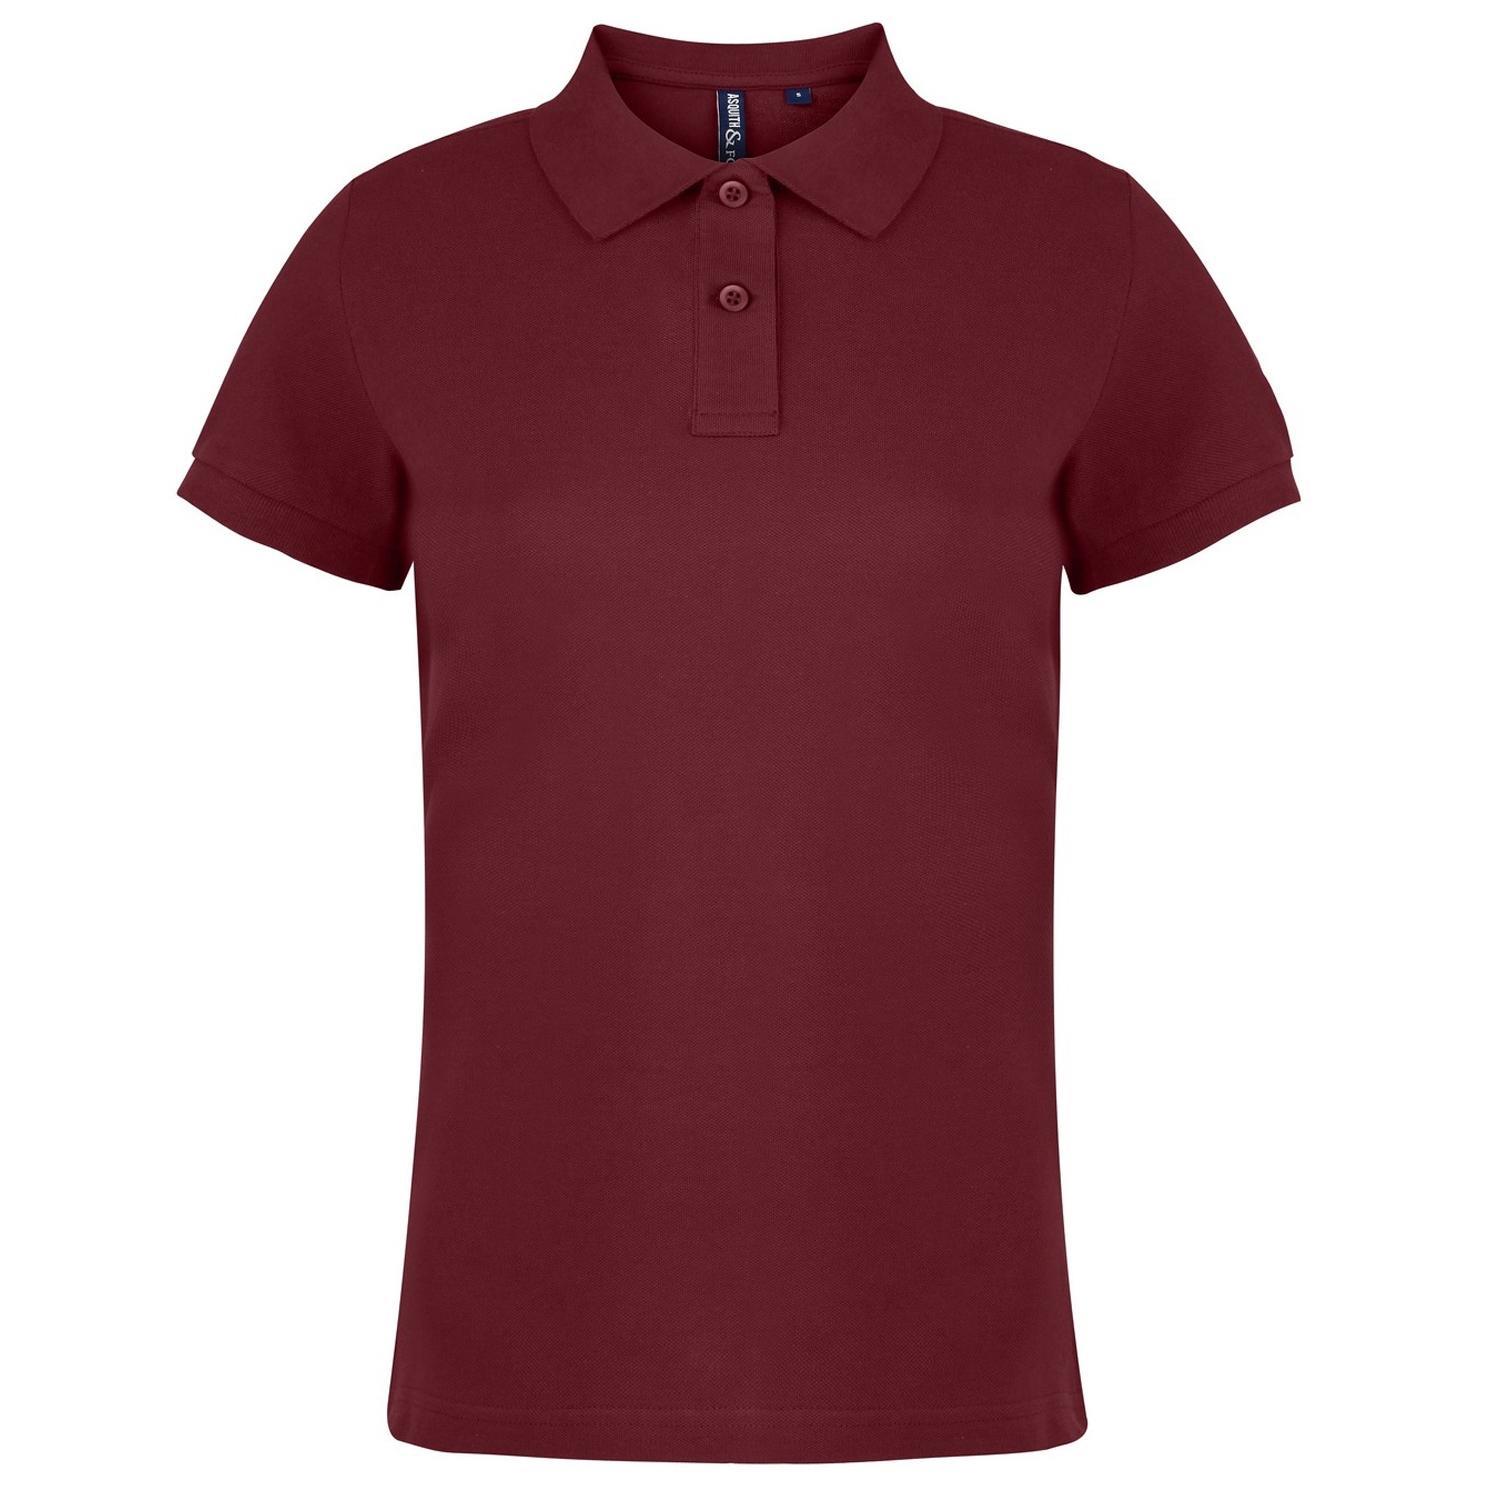 Asquith & Fox Womens/Ladies Plain Short Sleeve Polo Shirt (Burgundy) (M)